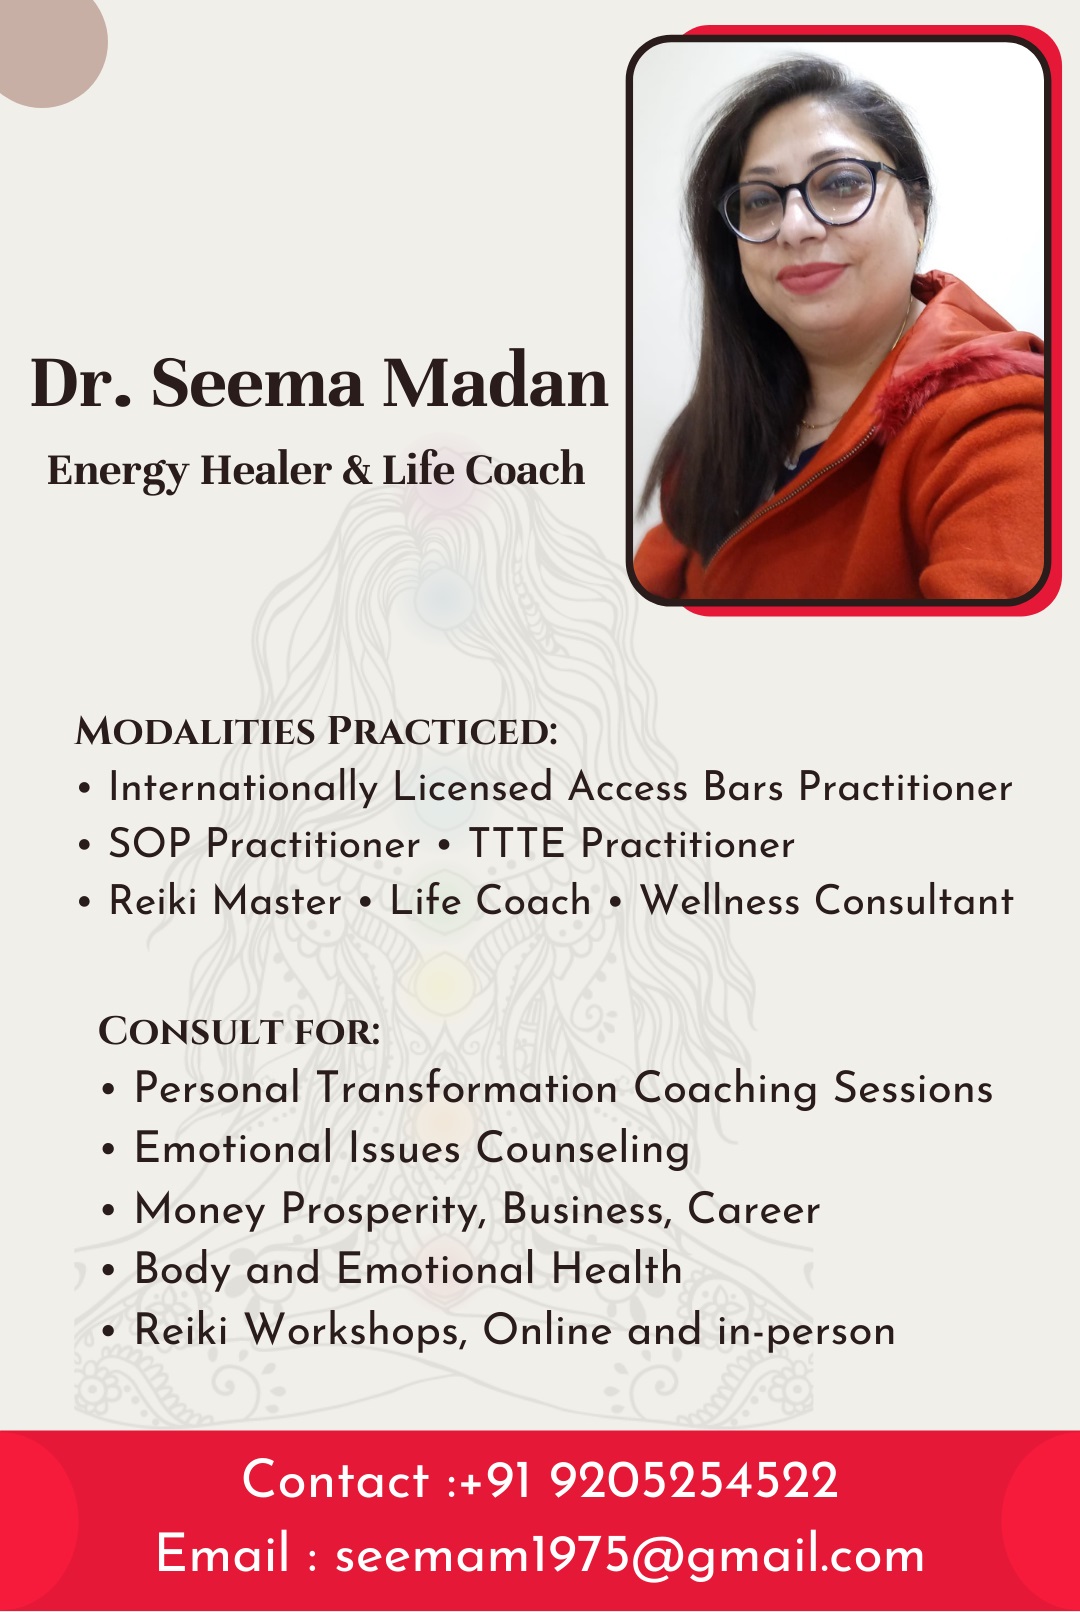 Dr. Seema Madan - Energy Healer & Life Coach - Indore